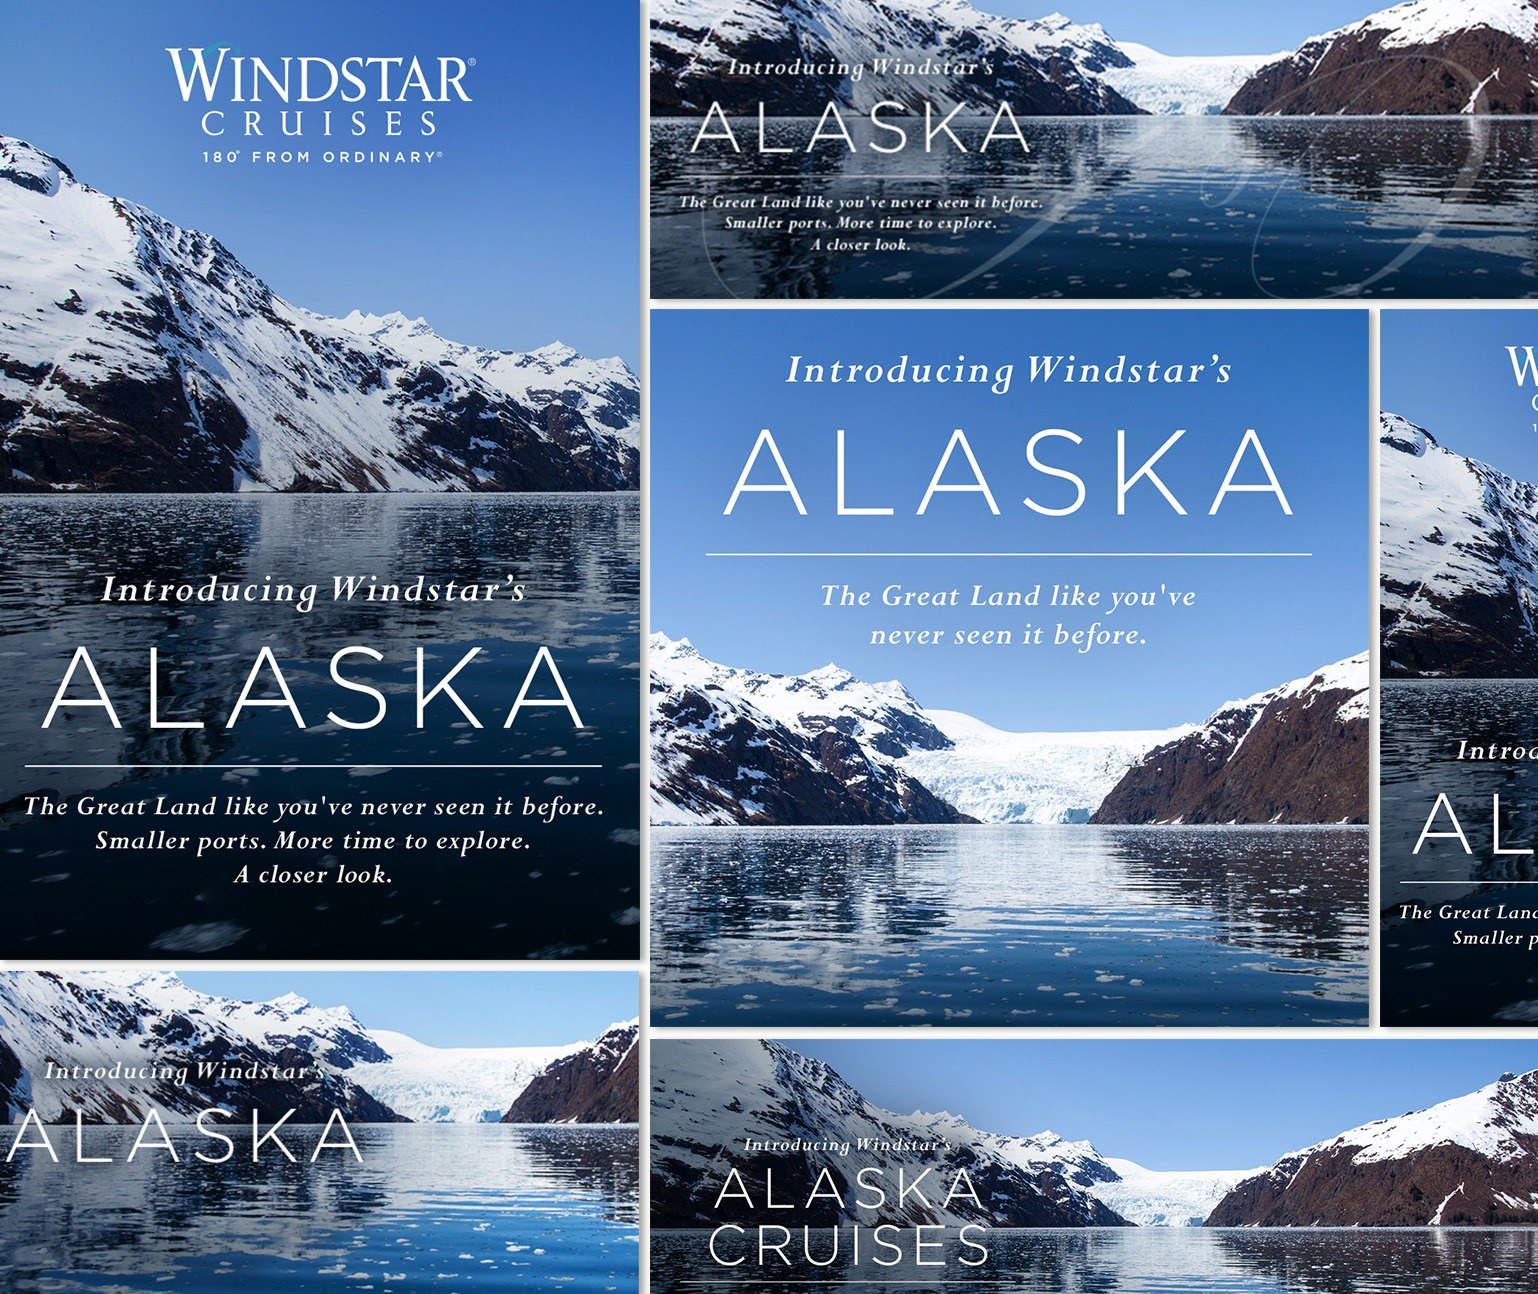 Images of Alaskan glaciers in a grid